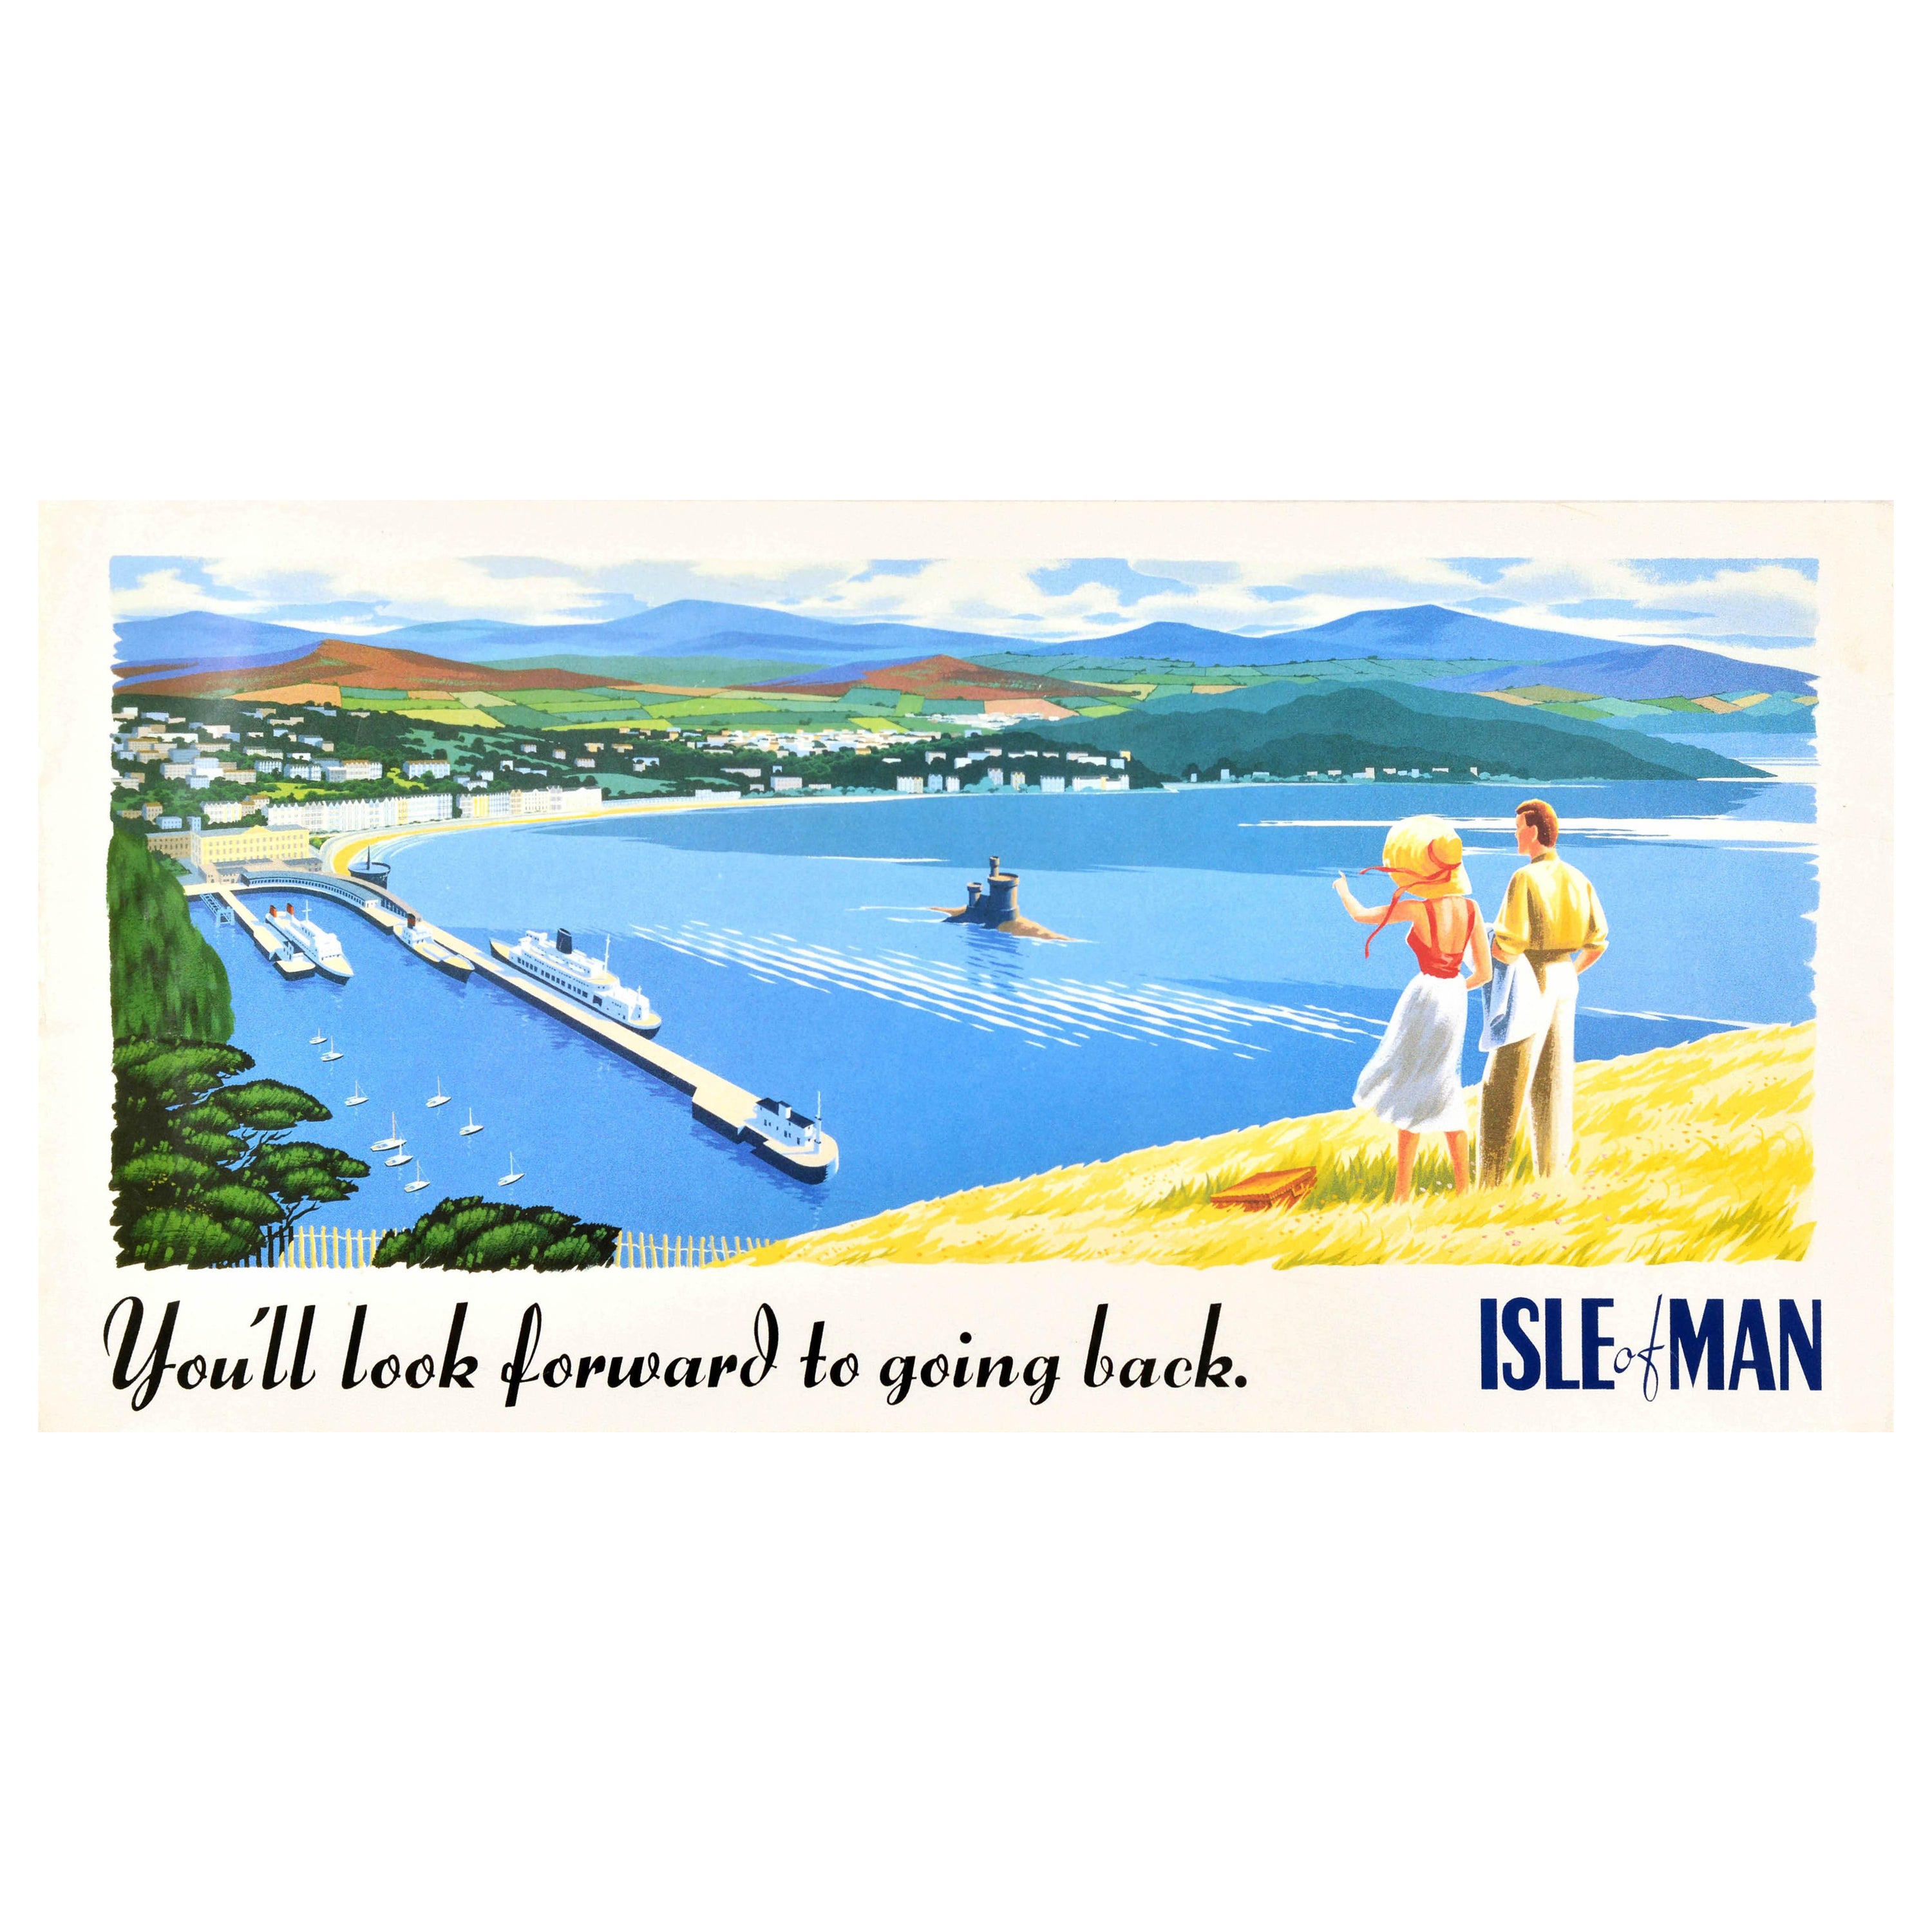 Original Vintage Travel Advertising Poster Isle Of Man Douglas England Design